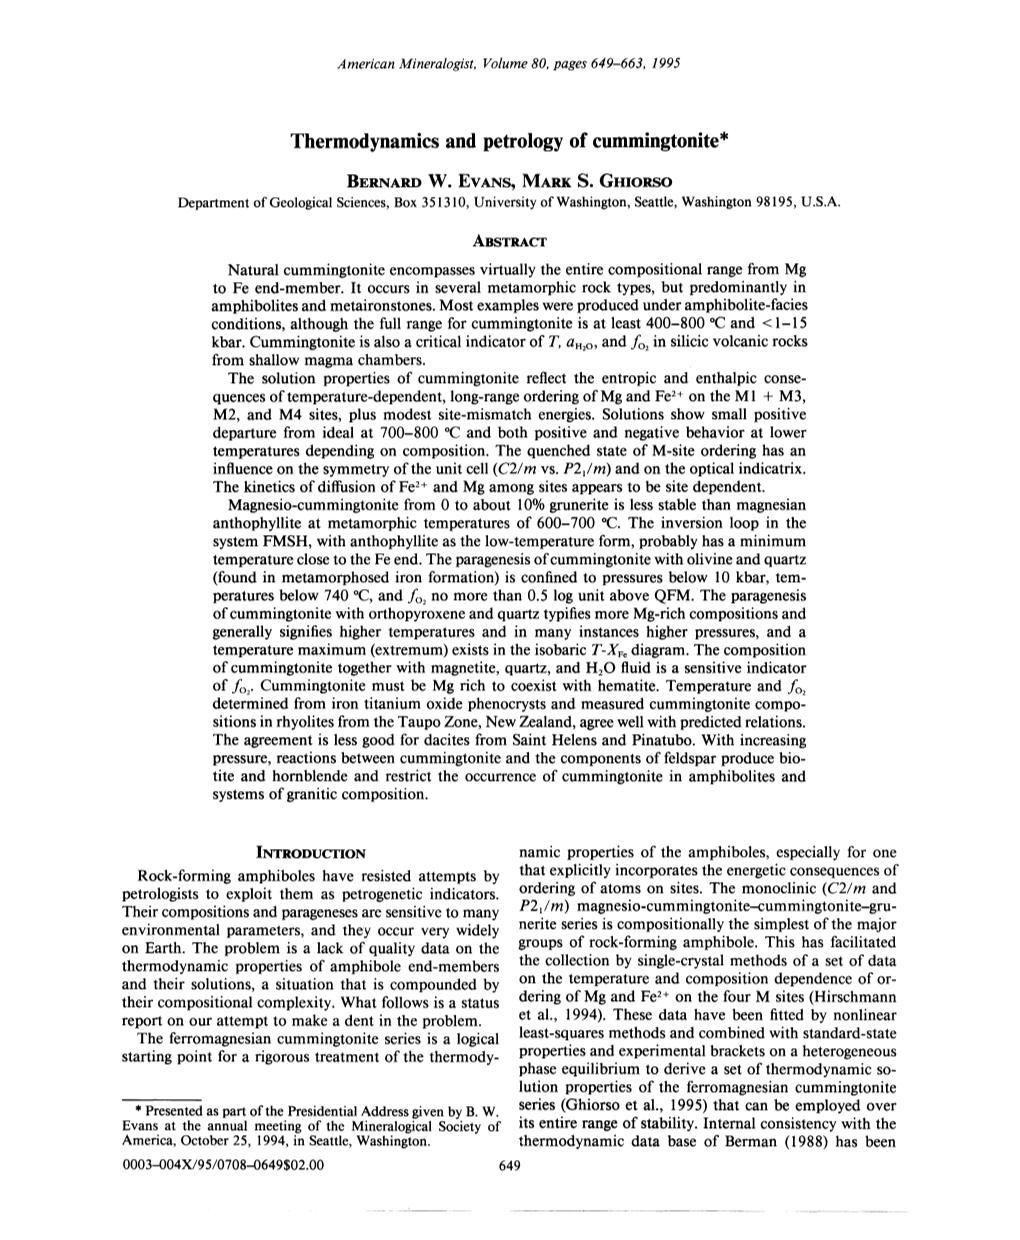 Thermodynamics and Petrology of Cummingtonite*